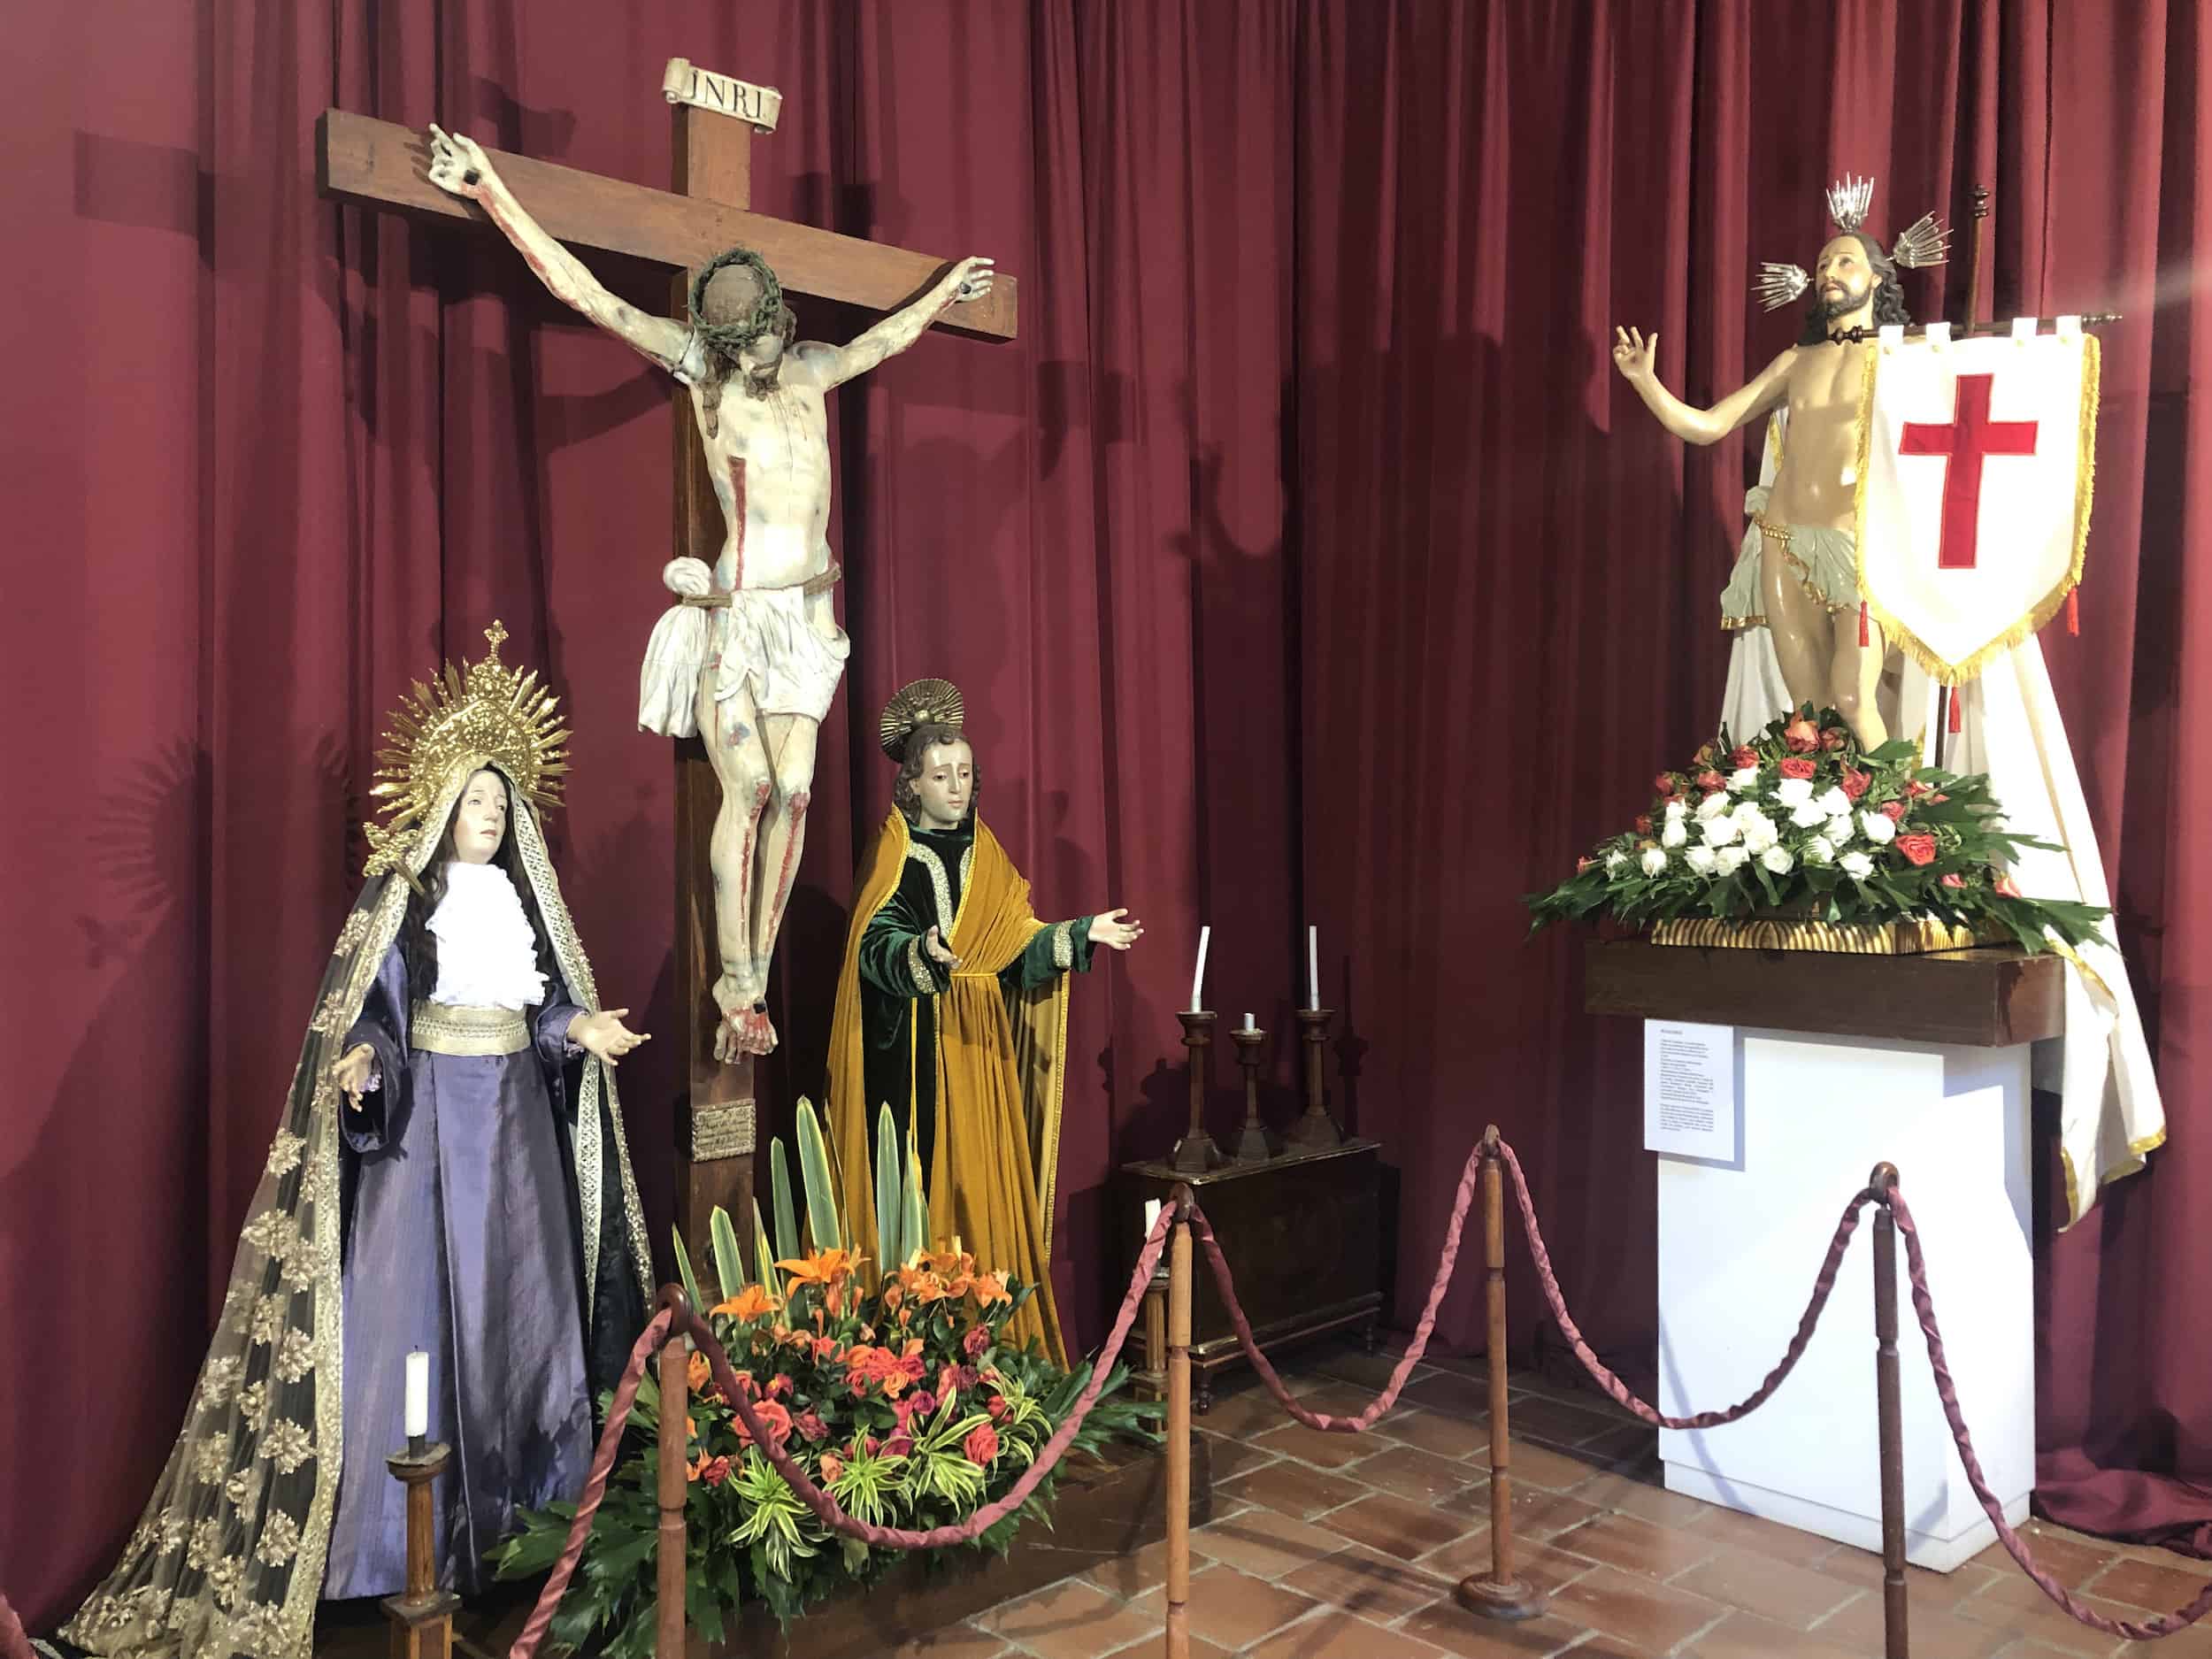 Sculptures at the Francisco Cristóbal Toro Museum of Religious Art in Santa Fe de Antioquia, Colombia